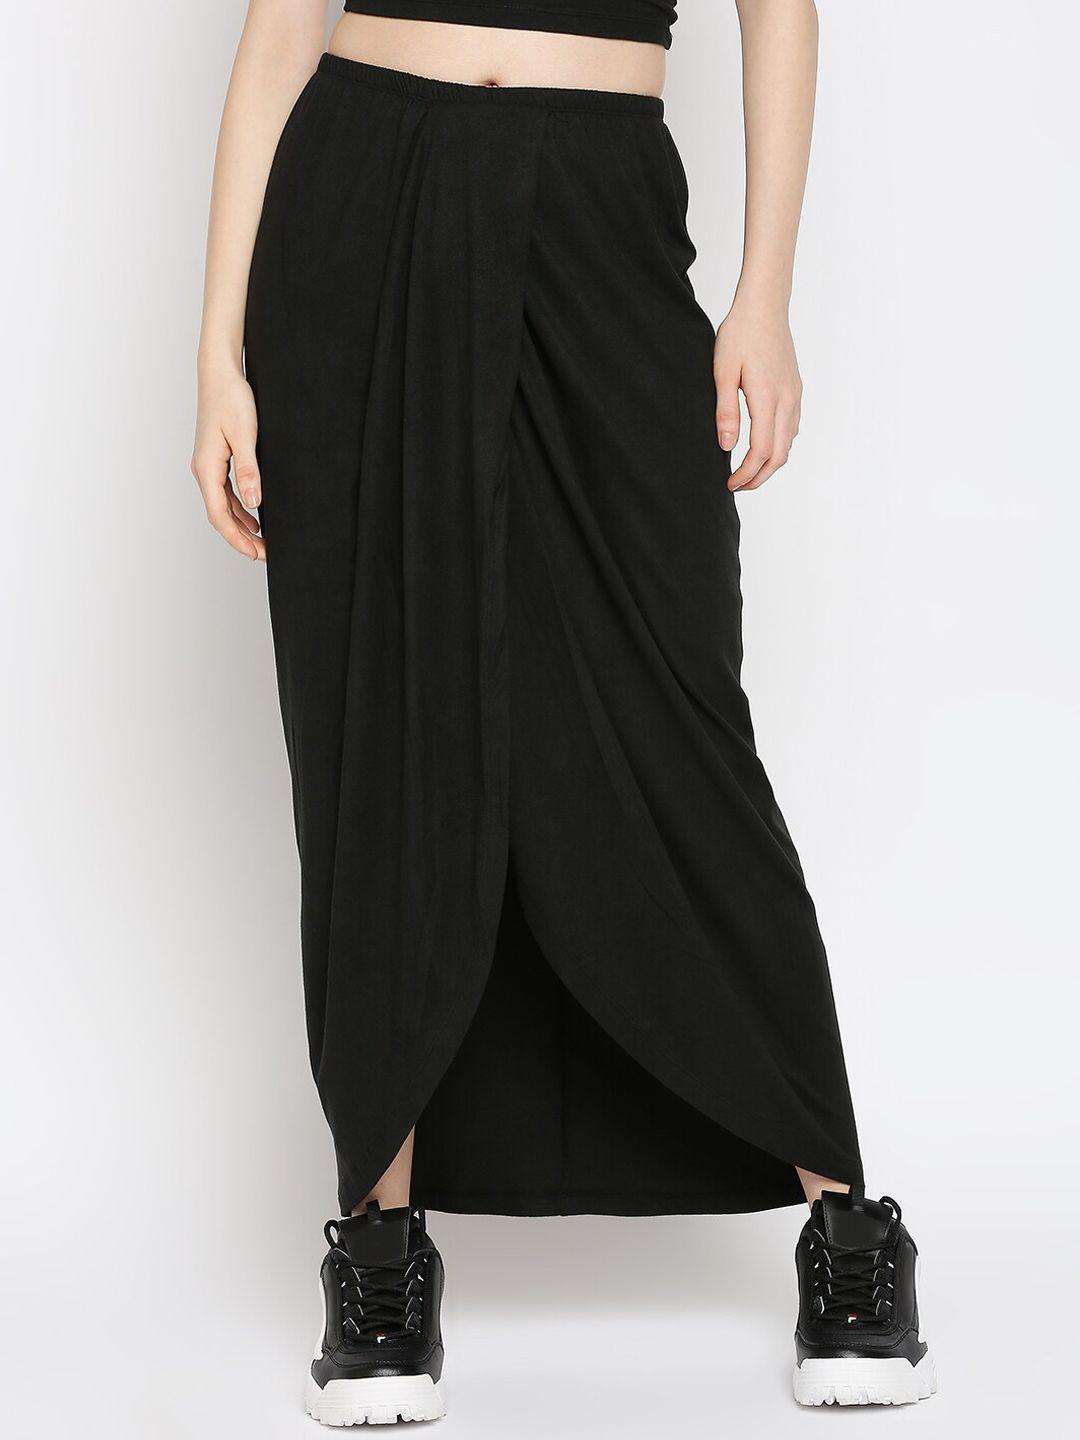 disrupt-women-black-solid-wrap-maxi-skirt